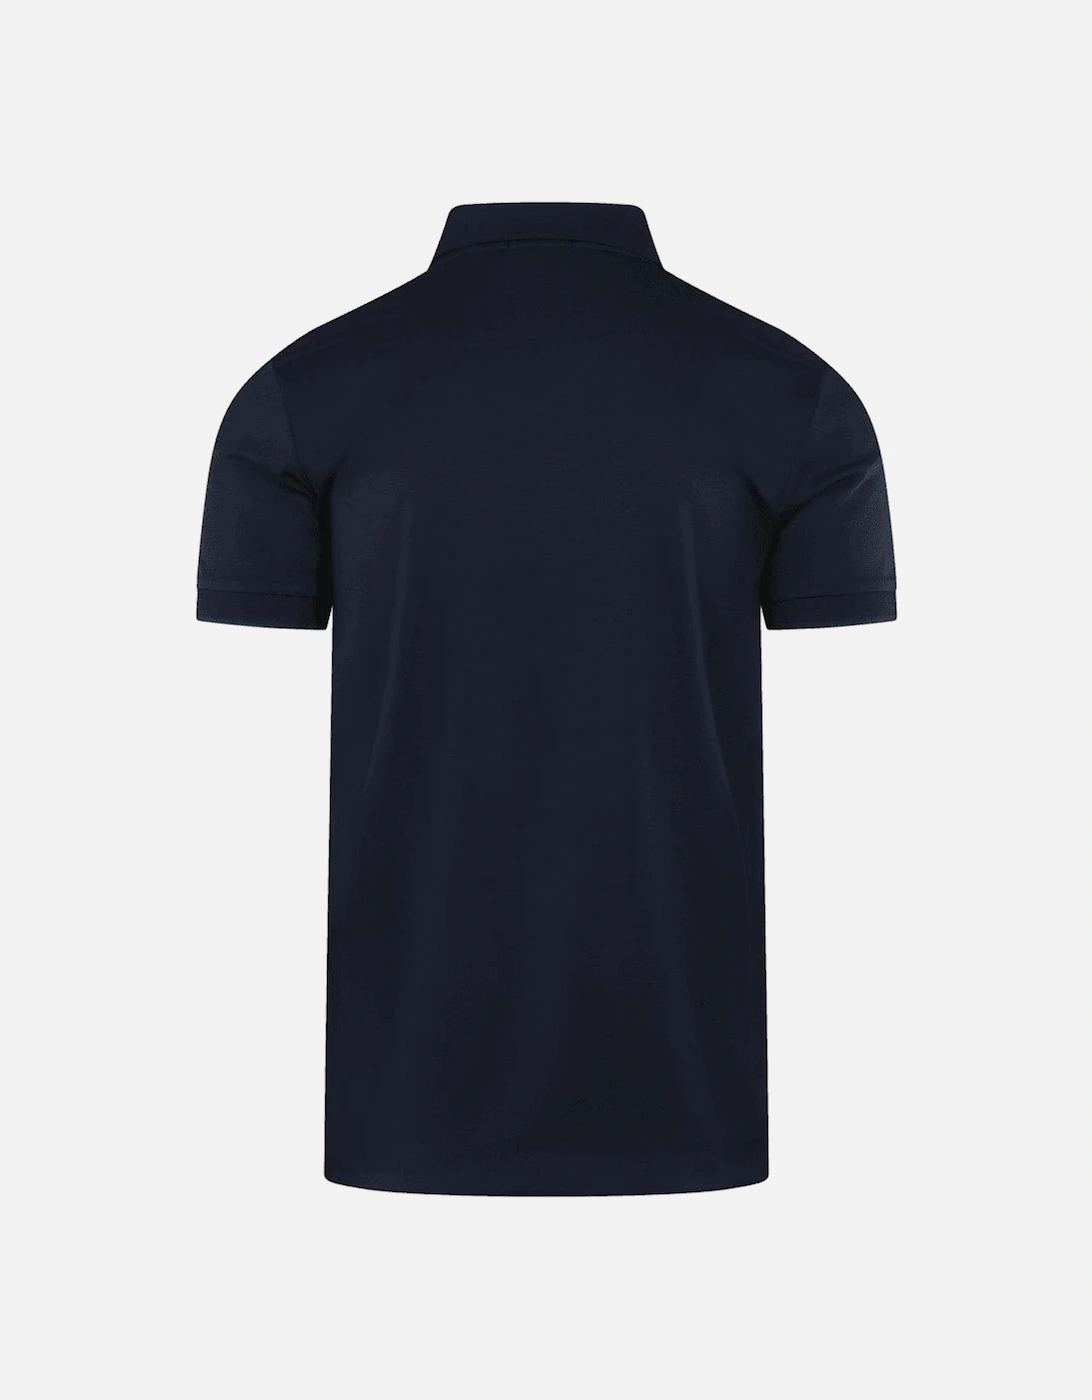 Paule Rubber Logo Slim Fit Navy Polo Shirt